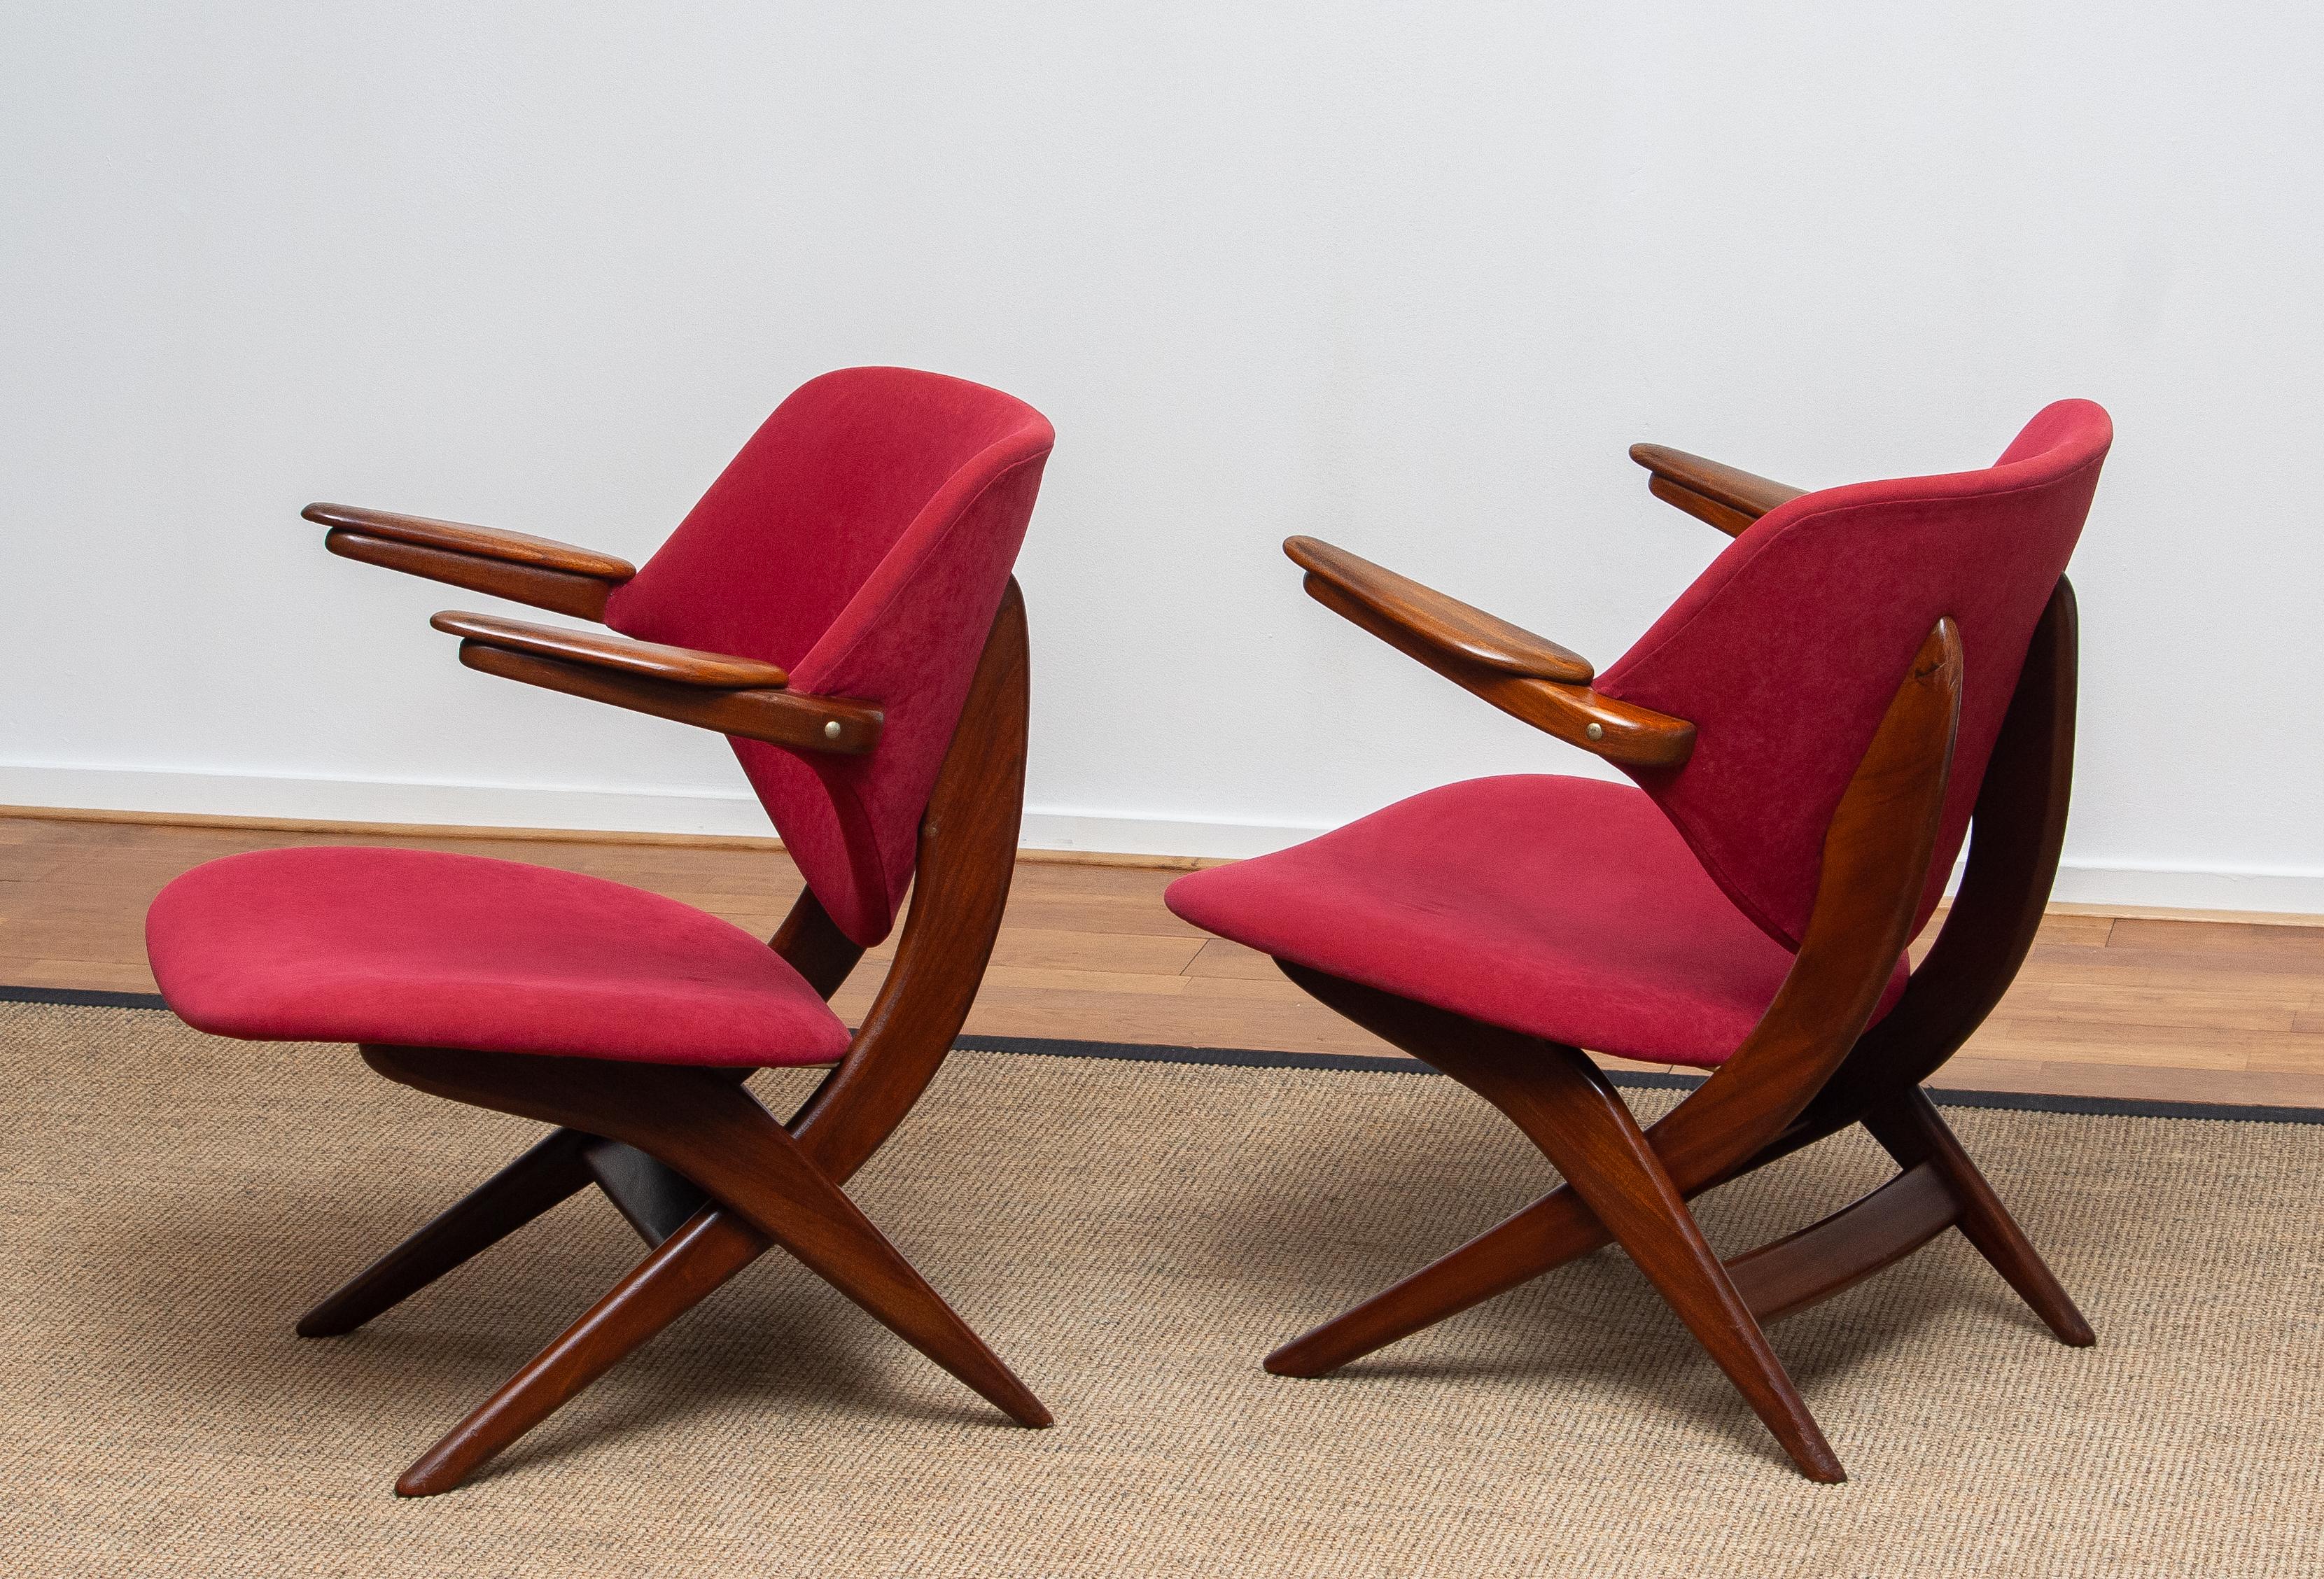 1950s, Set of Two Teak Lounge/Easy Chairs by Louis Van Teeffelen for Wébé 2